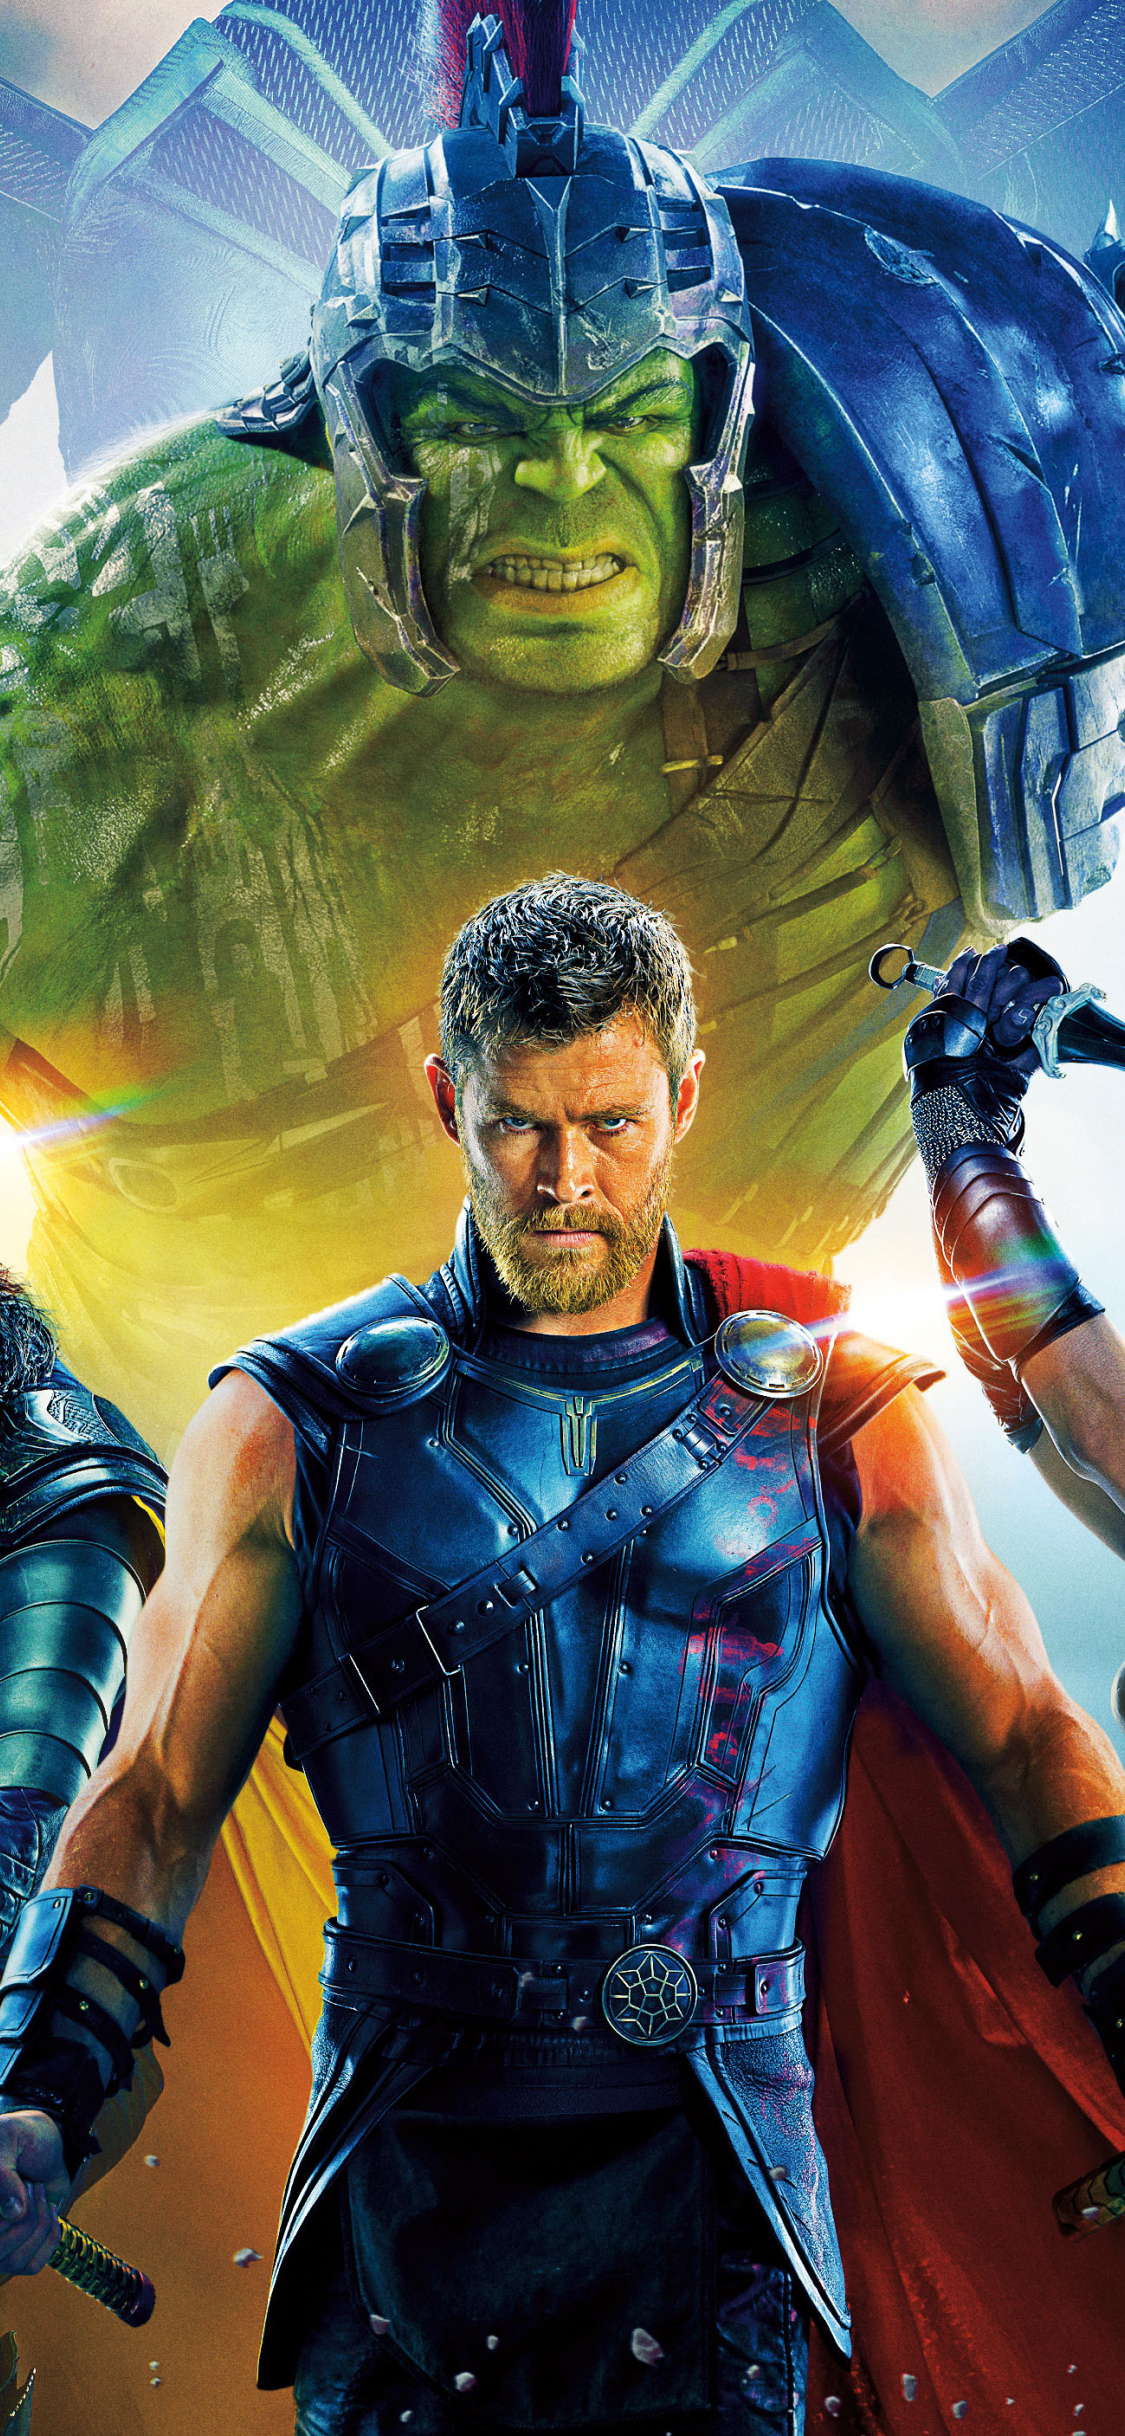 MCU Challenge #17 – Thor: Ragnarok – Jack and the Geekstalk